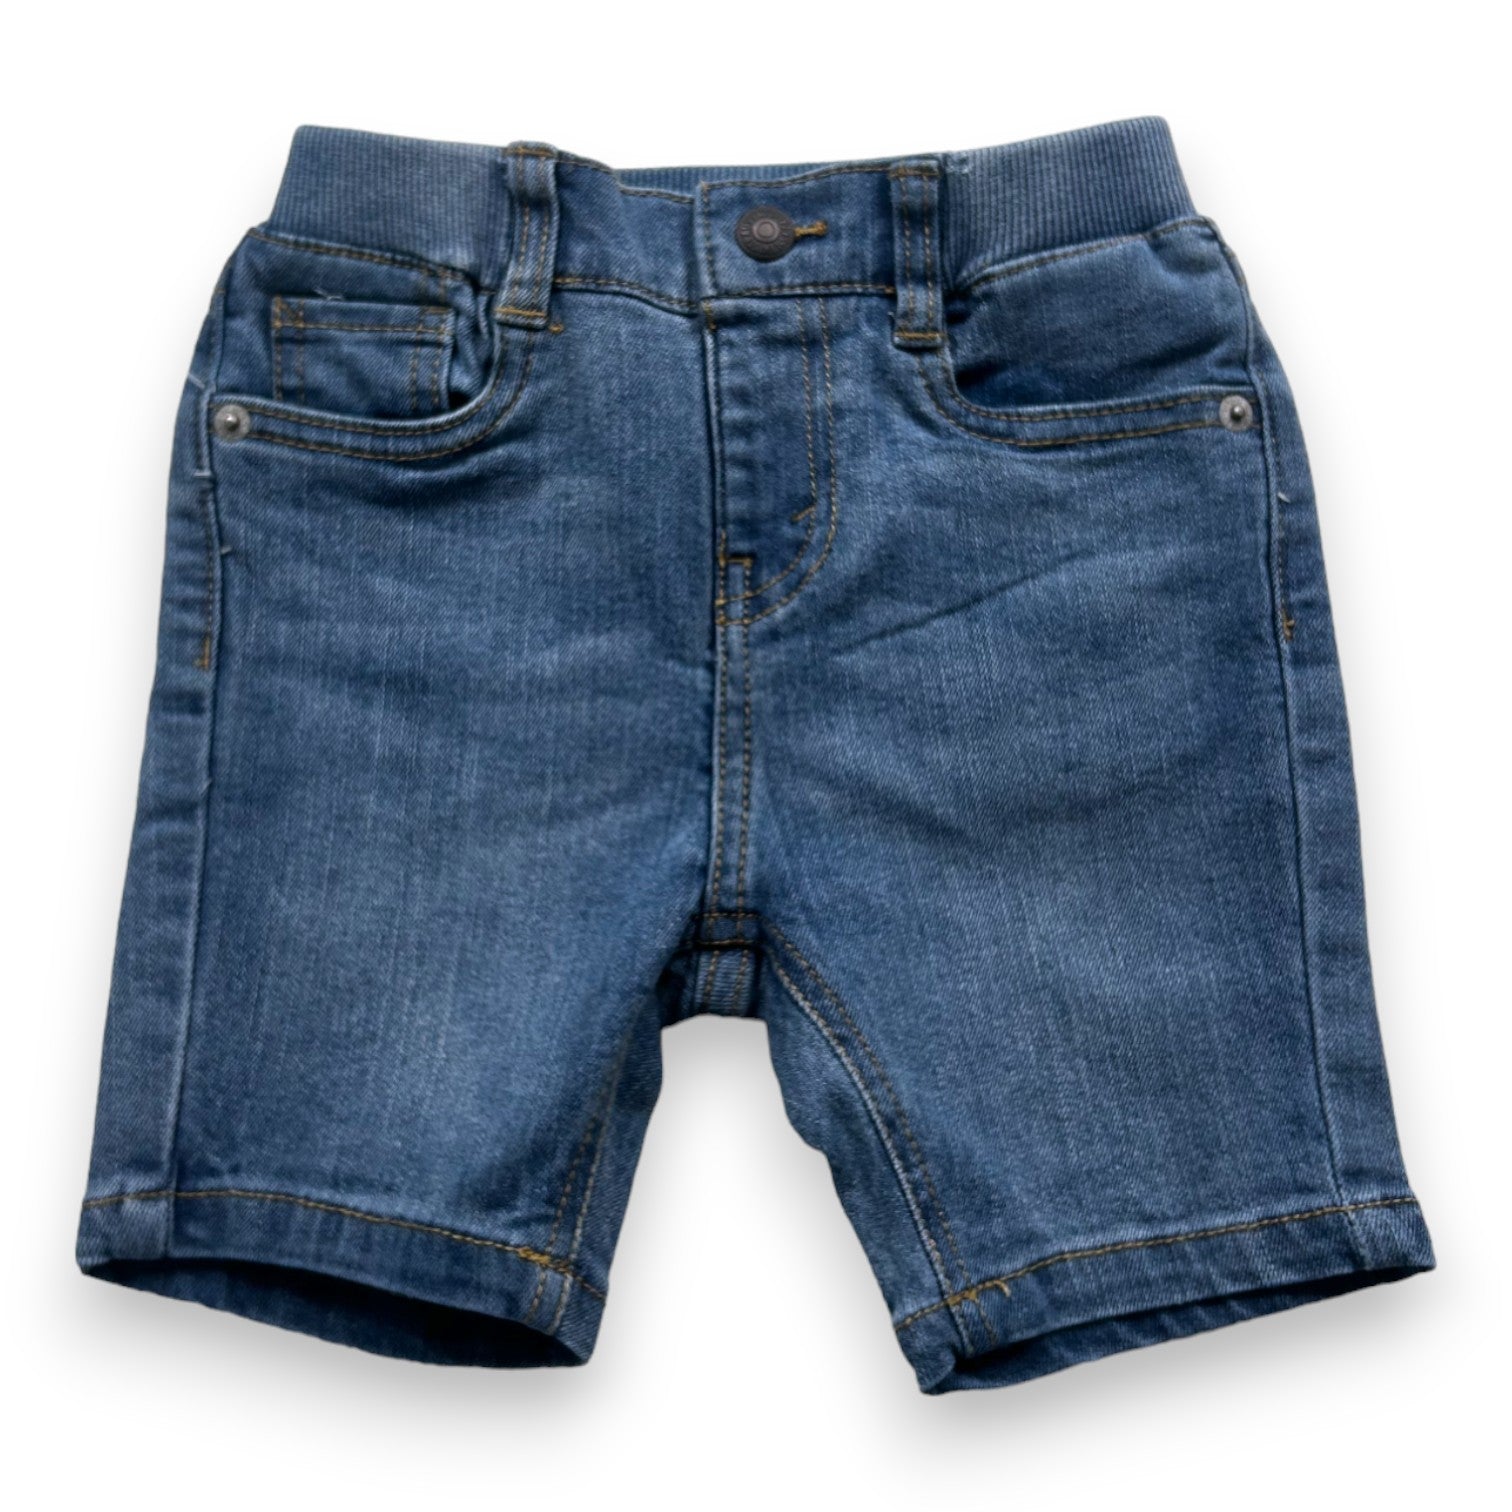 LEVIS - Short en jean bleu - 3 ans